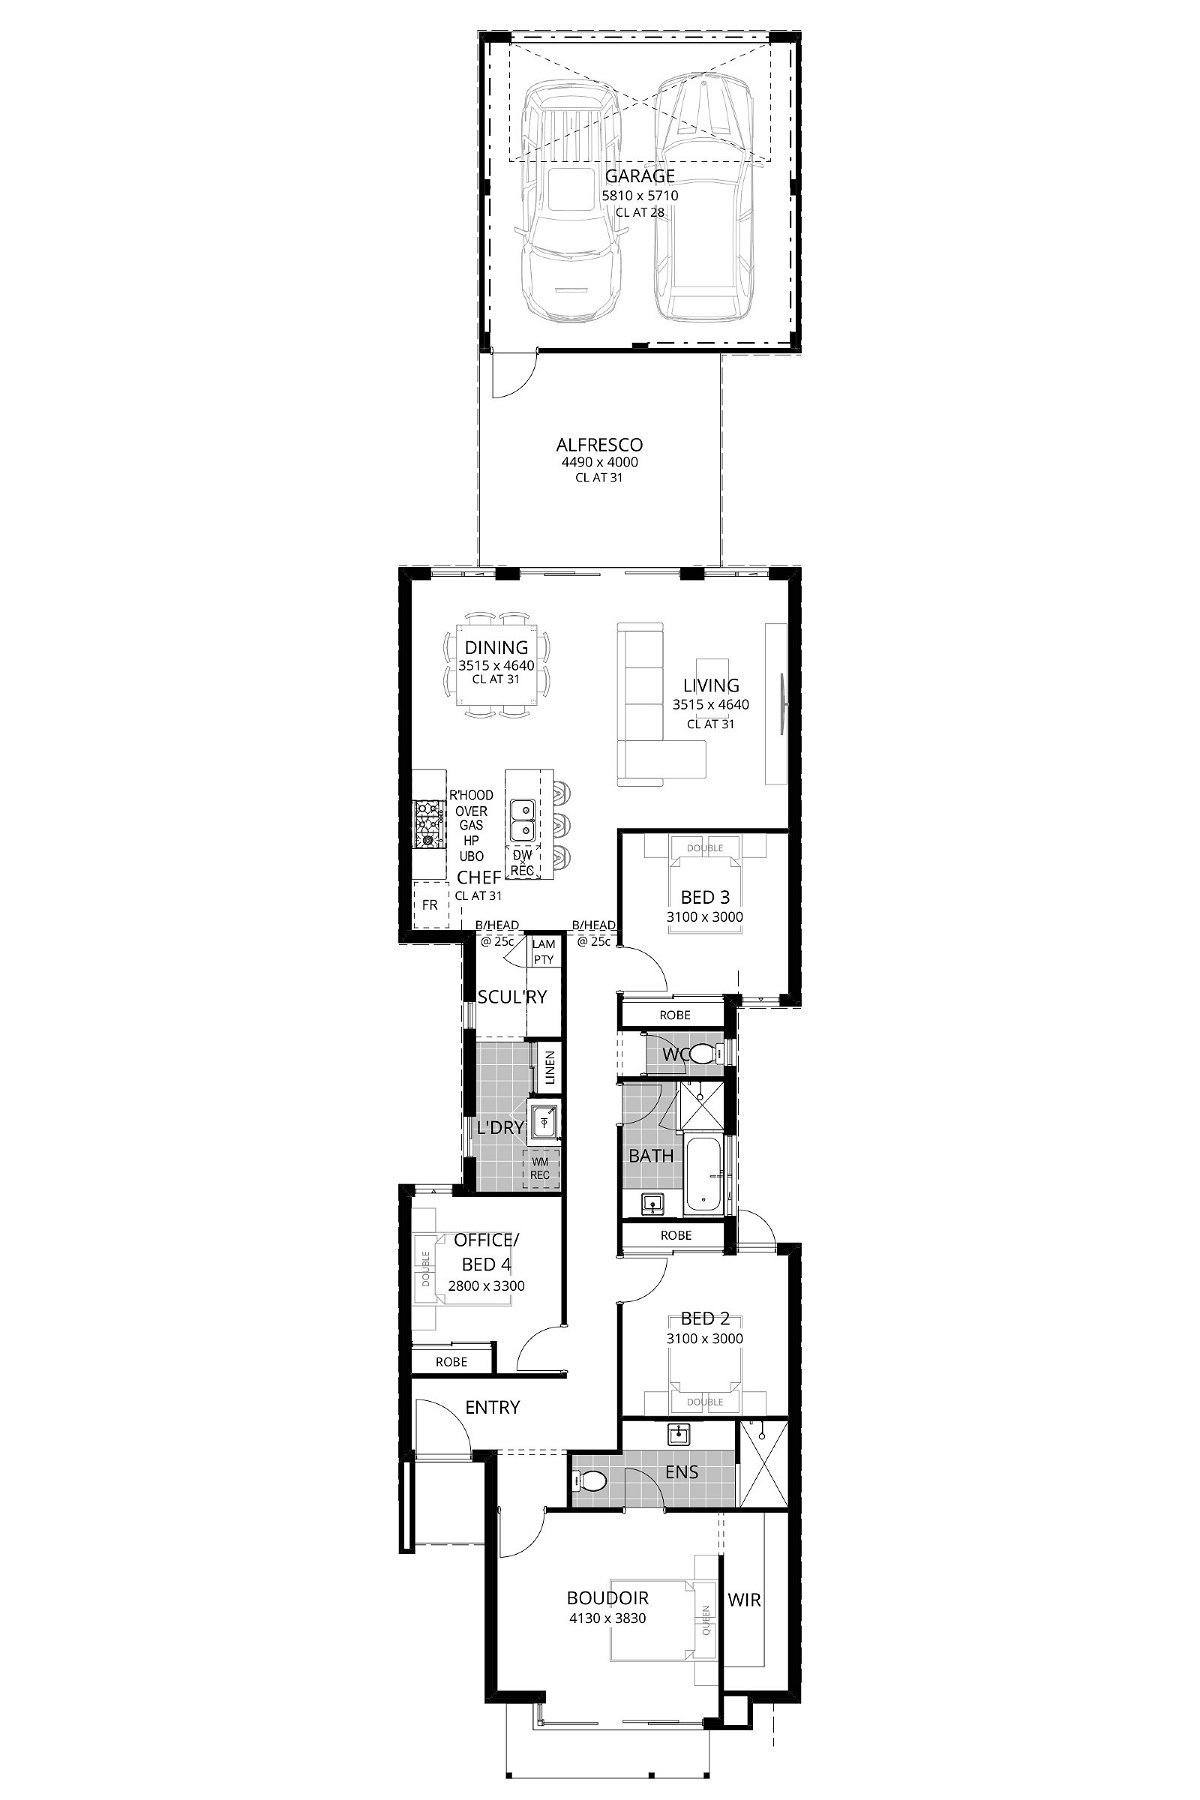 Residential Attitudes - Vista Del Toro - Floorplan - Vista Del Toro Website Floorplan